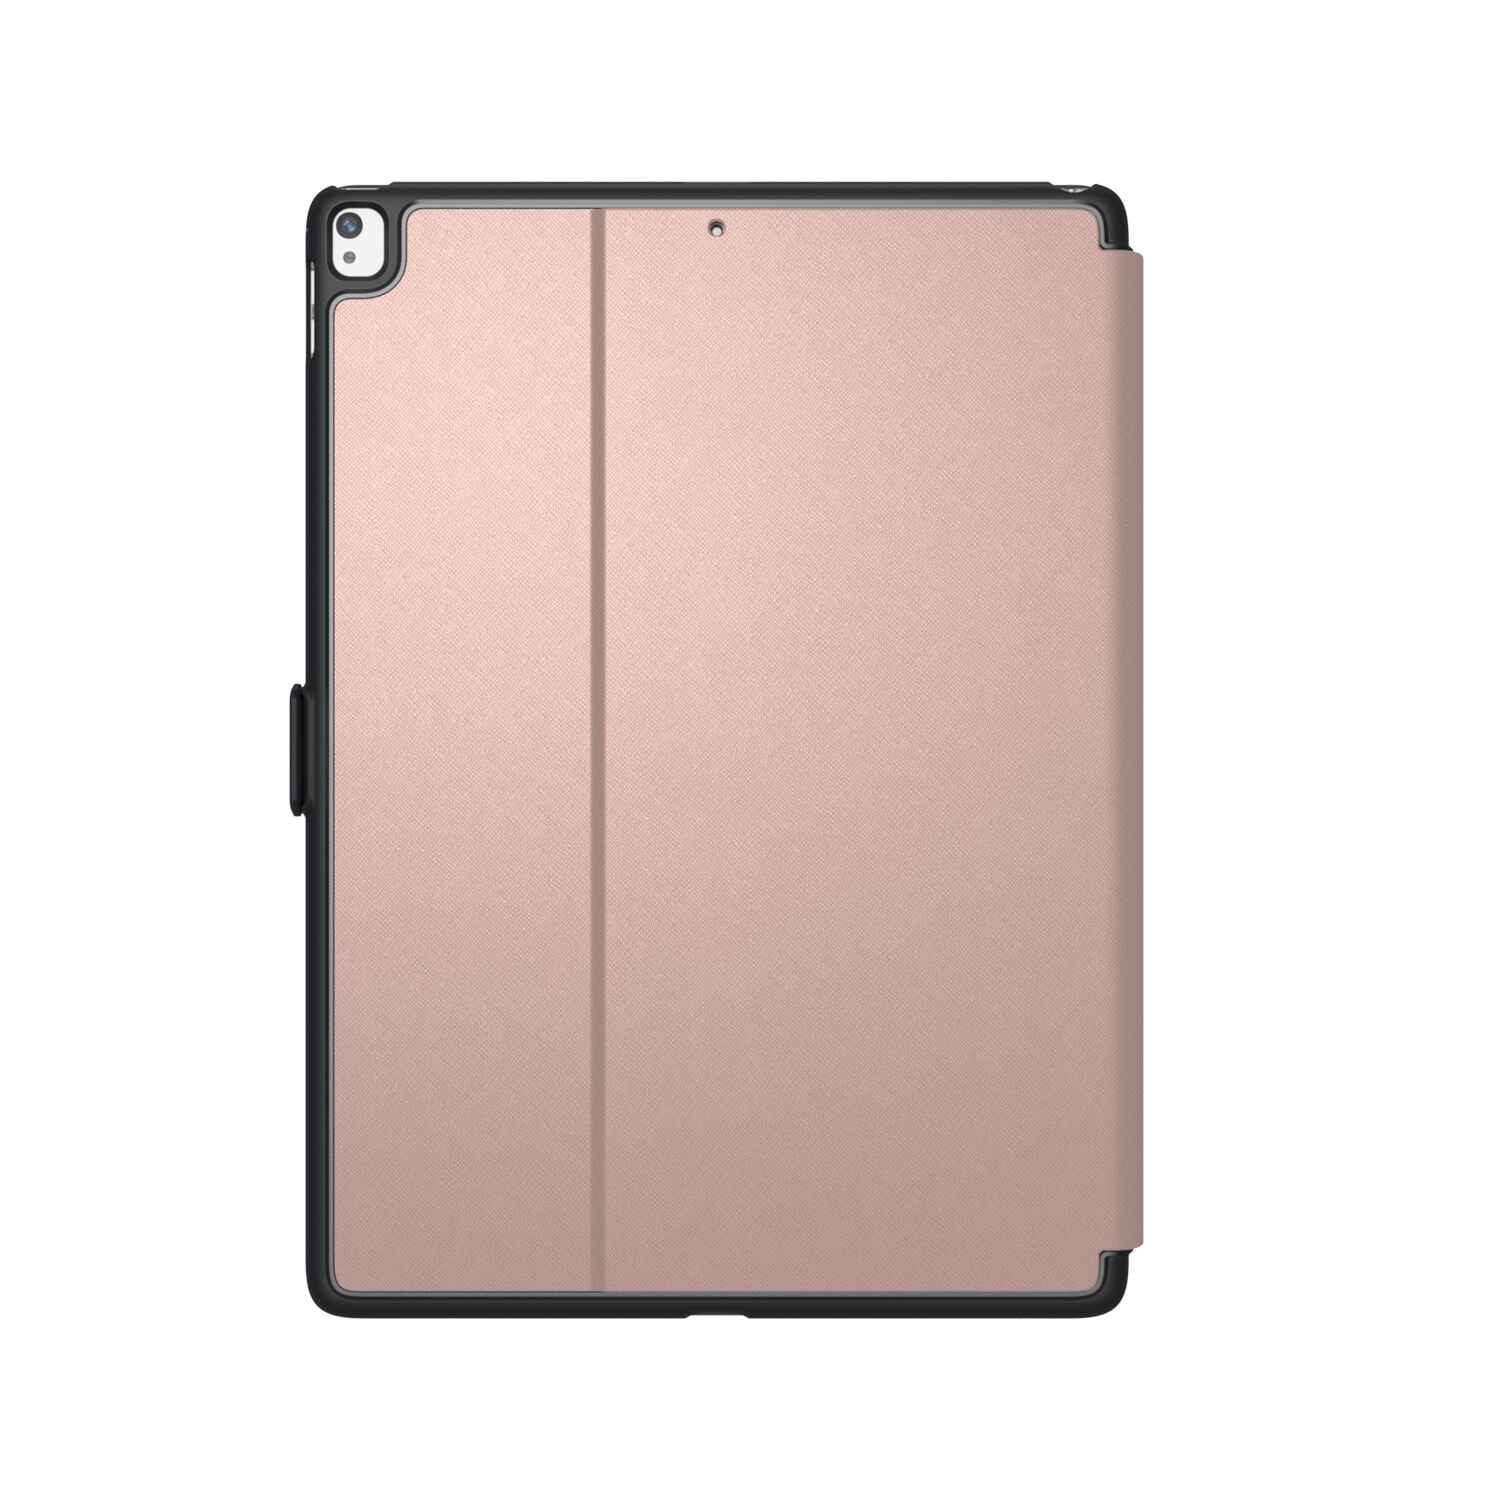 Speck Balance Folio Case For iPad Air 1/2 and Pro 9.7 inch, Rose  Gold/Graphite Grey (New Open Box) - Walmart.com